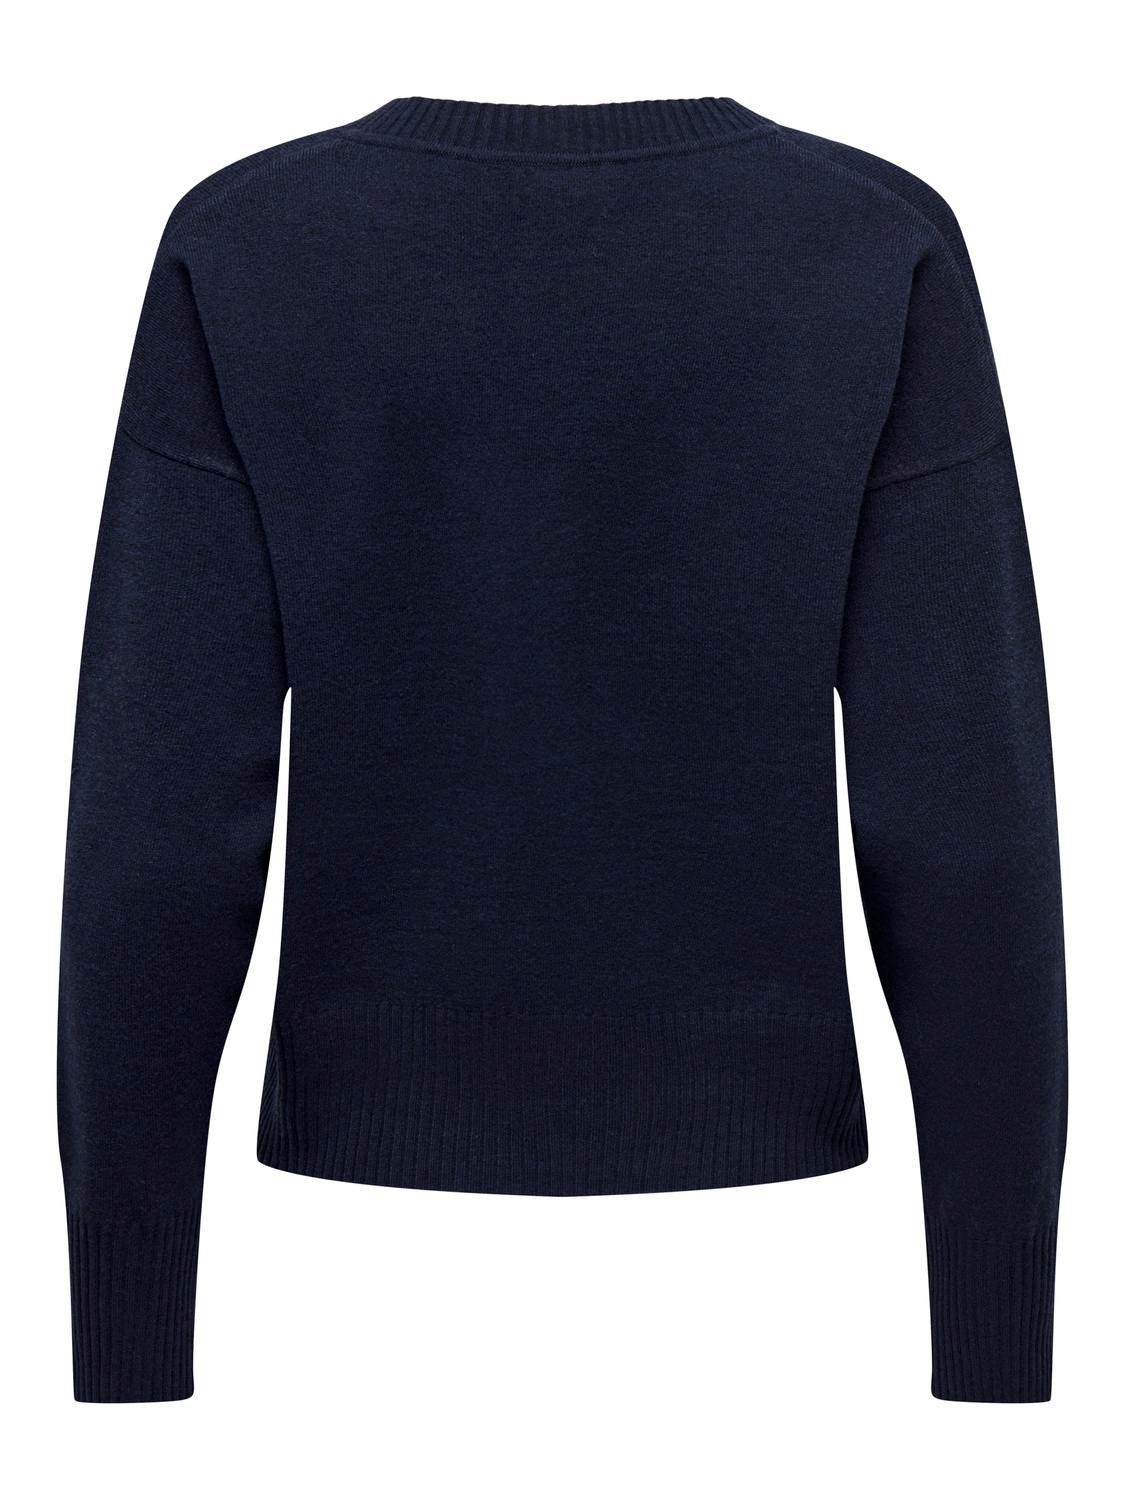 ONLY V-neck knitted pullover -Sky Captain - 15295892